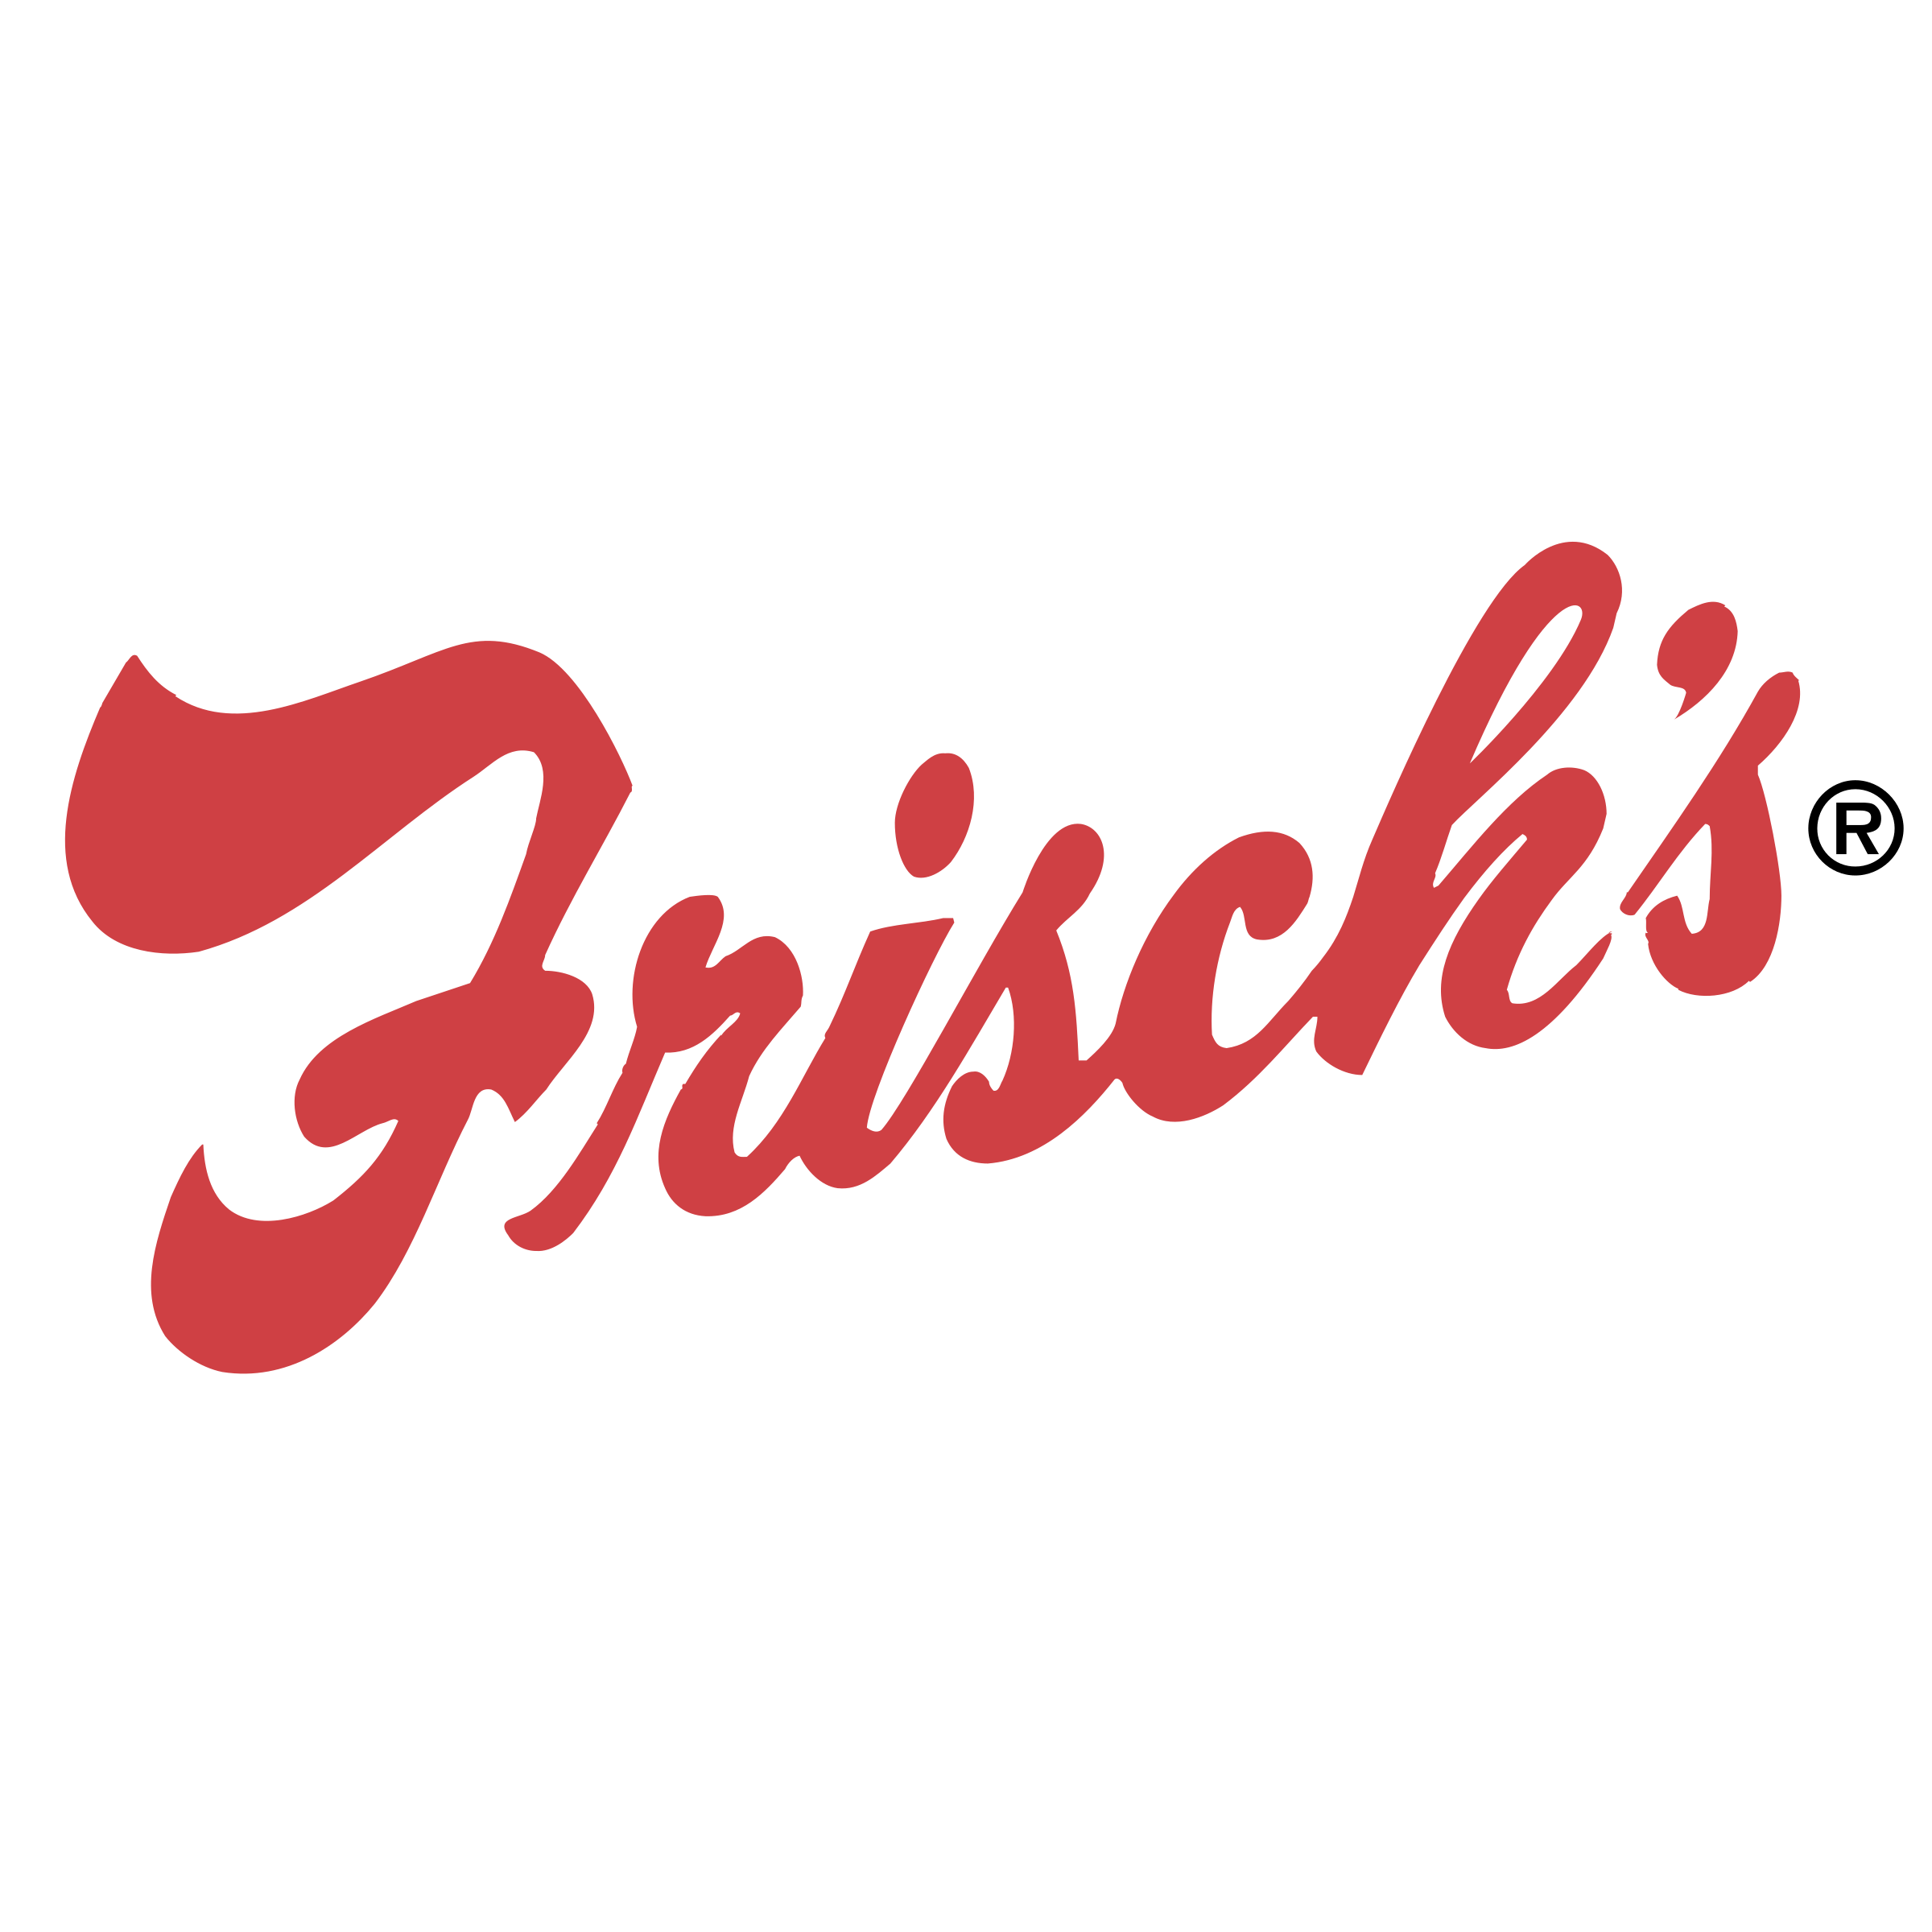 Freshes Restaurant Logo - Frisch's Restaurants Logo PNG Transparent & SVG Vector